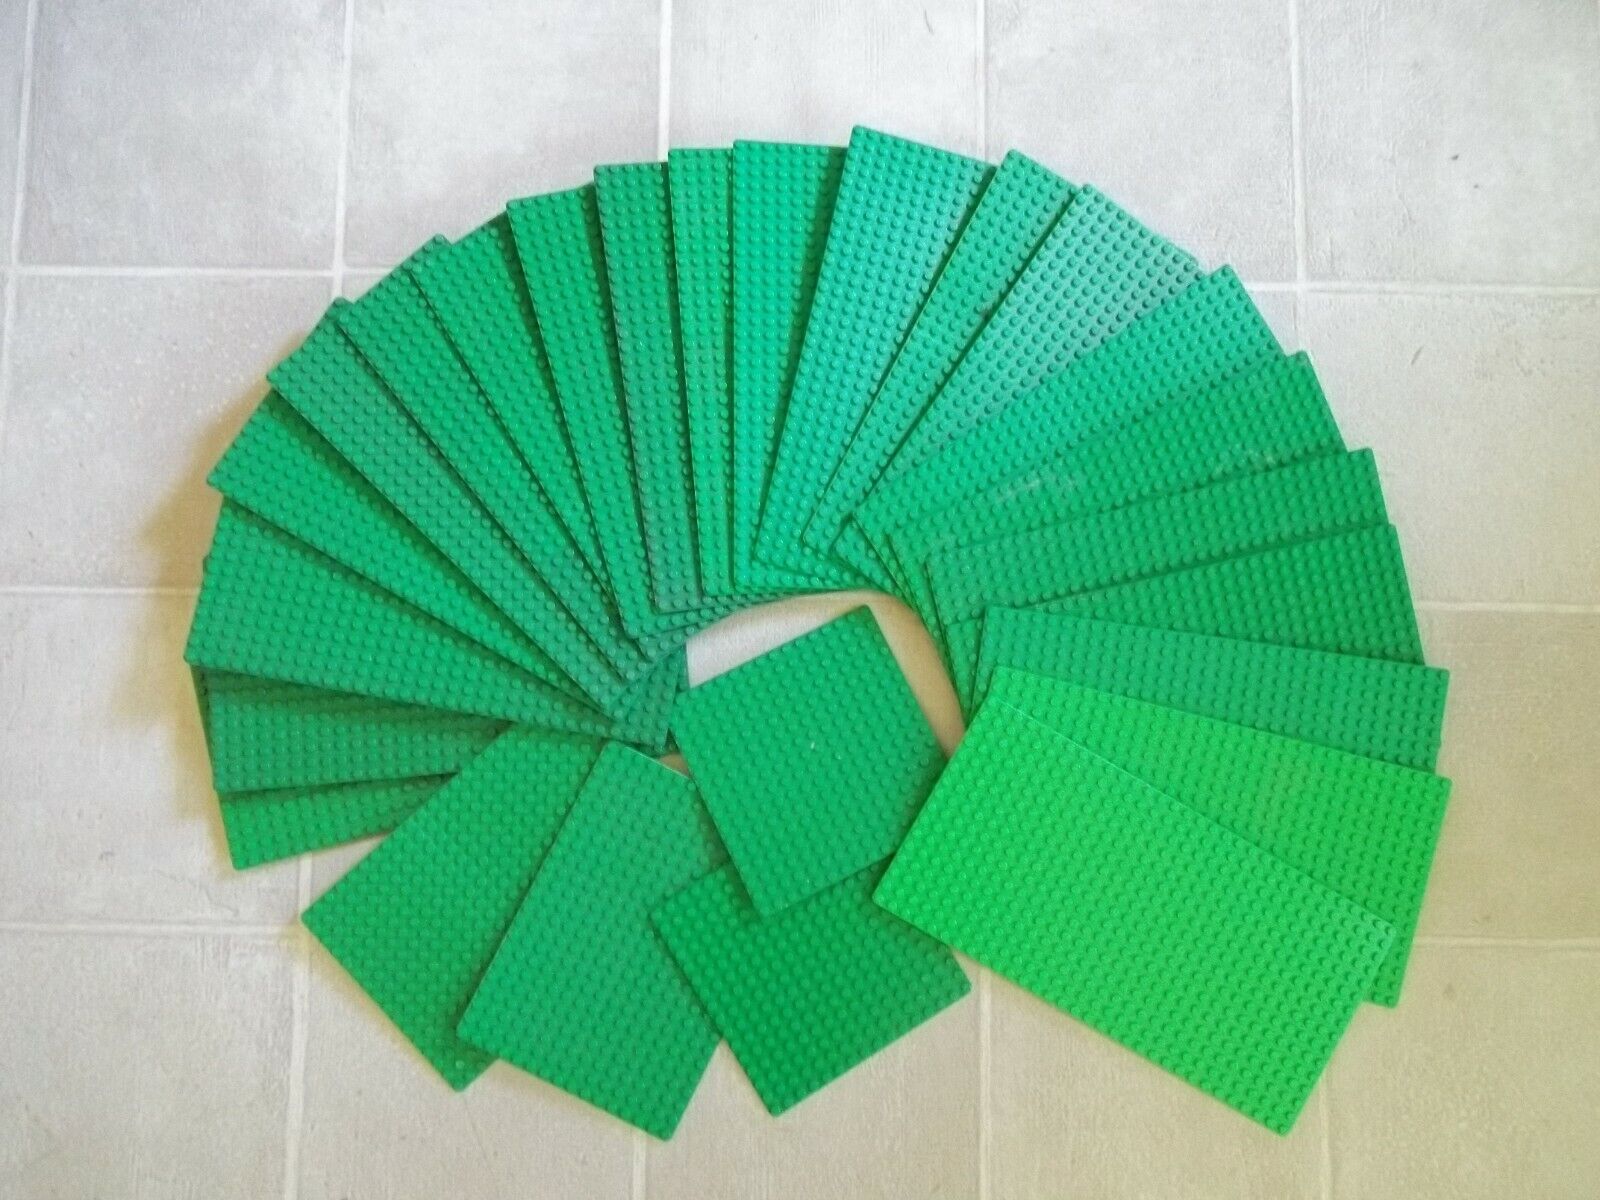 Lego Green Baseplates Lot of 25